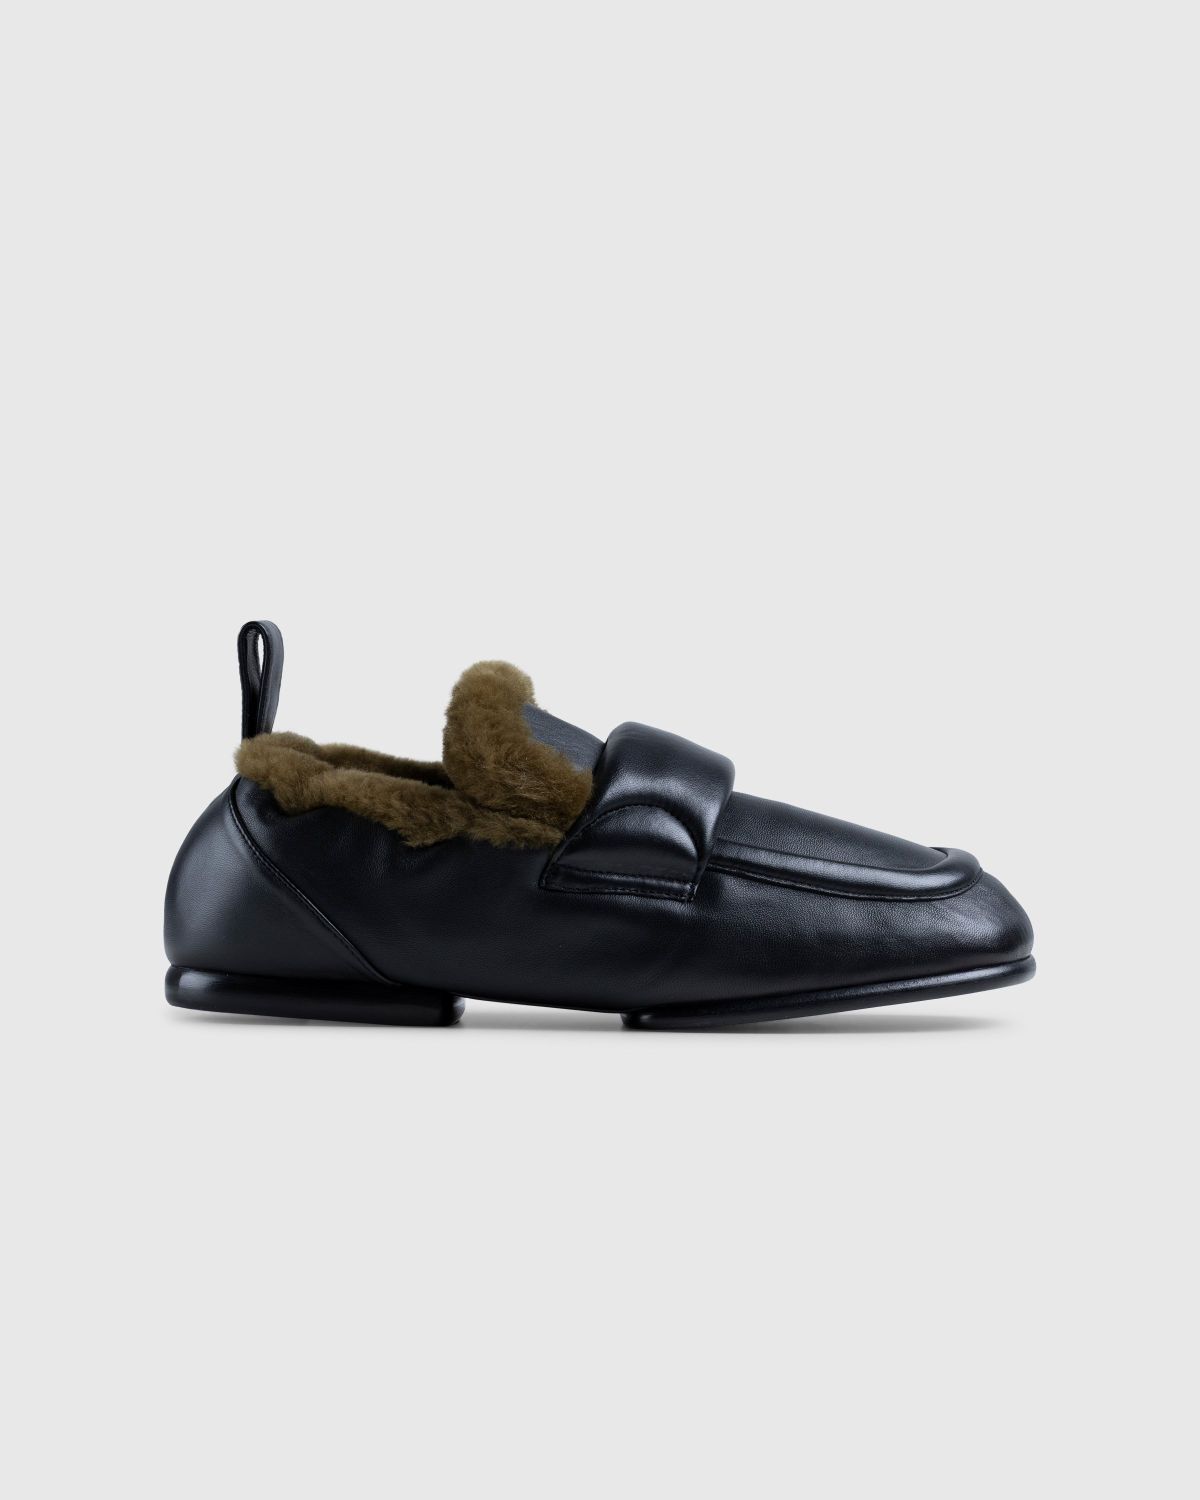 Dries van Noten – Padded Faux Fur Loafers Black - Sandals - Black - Image 1